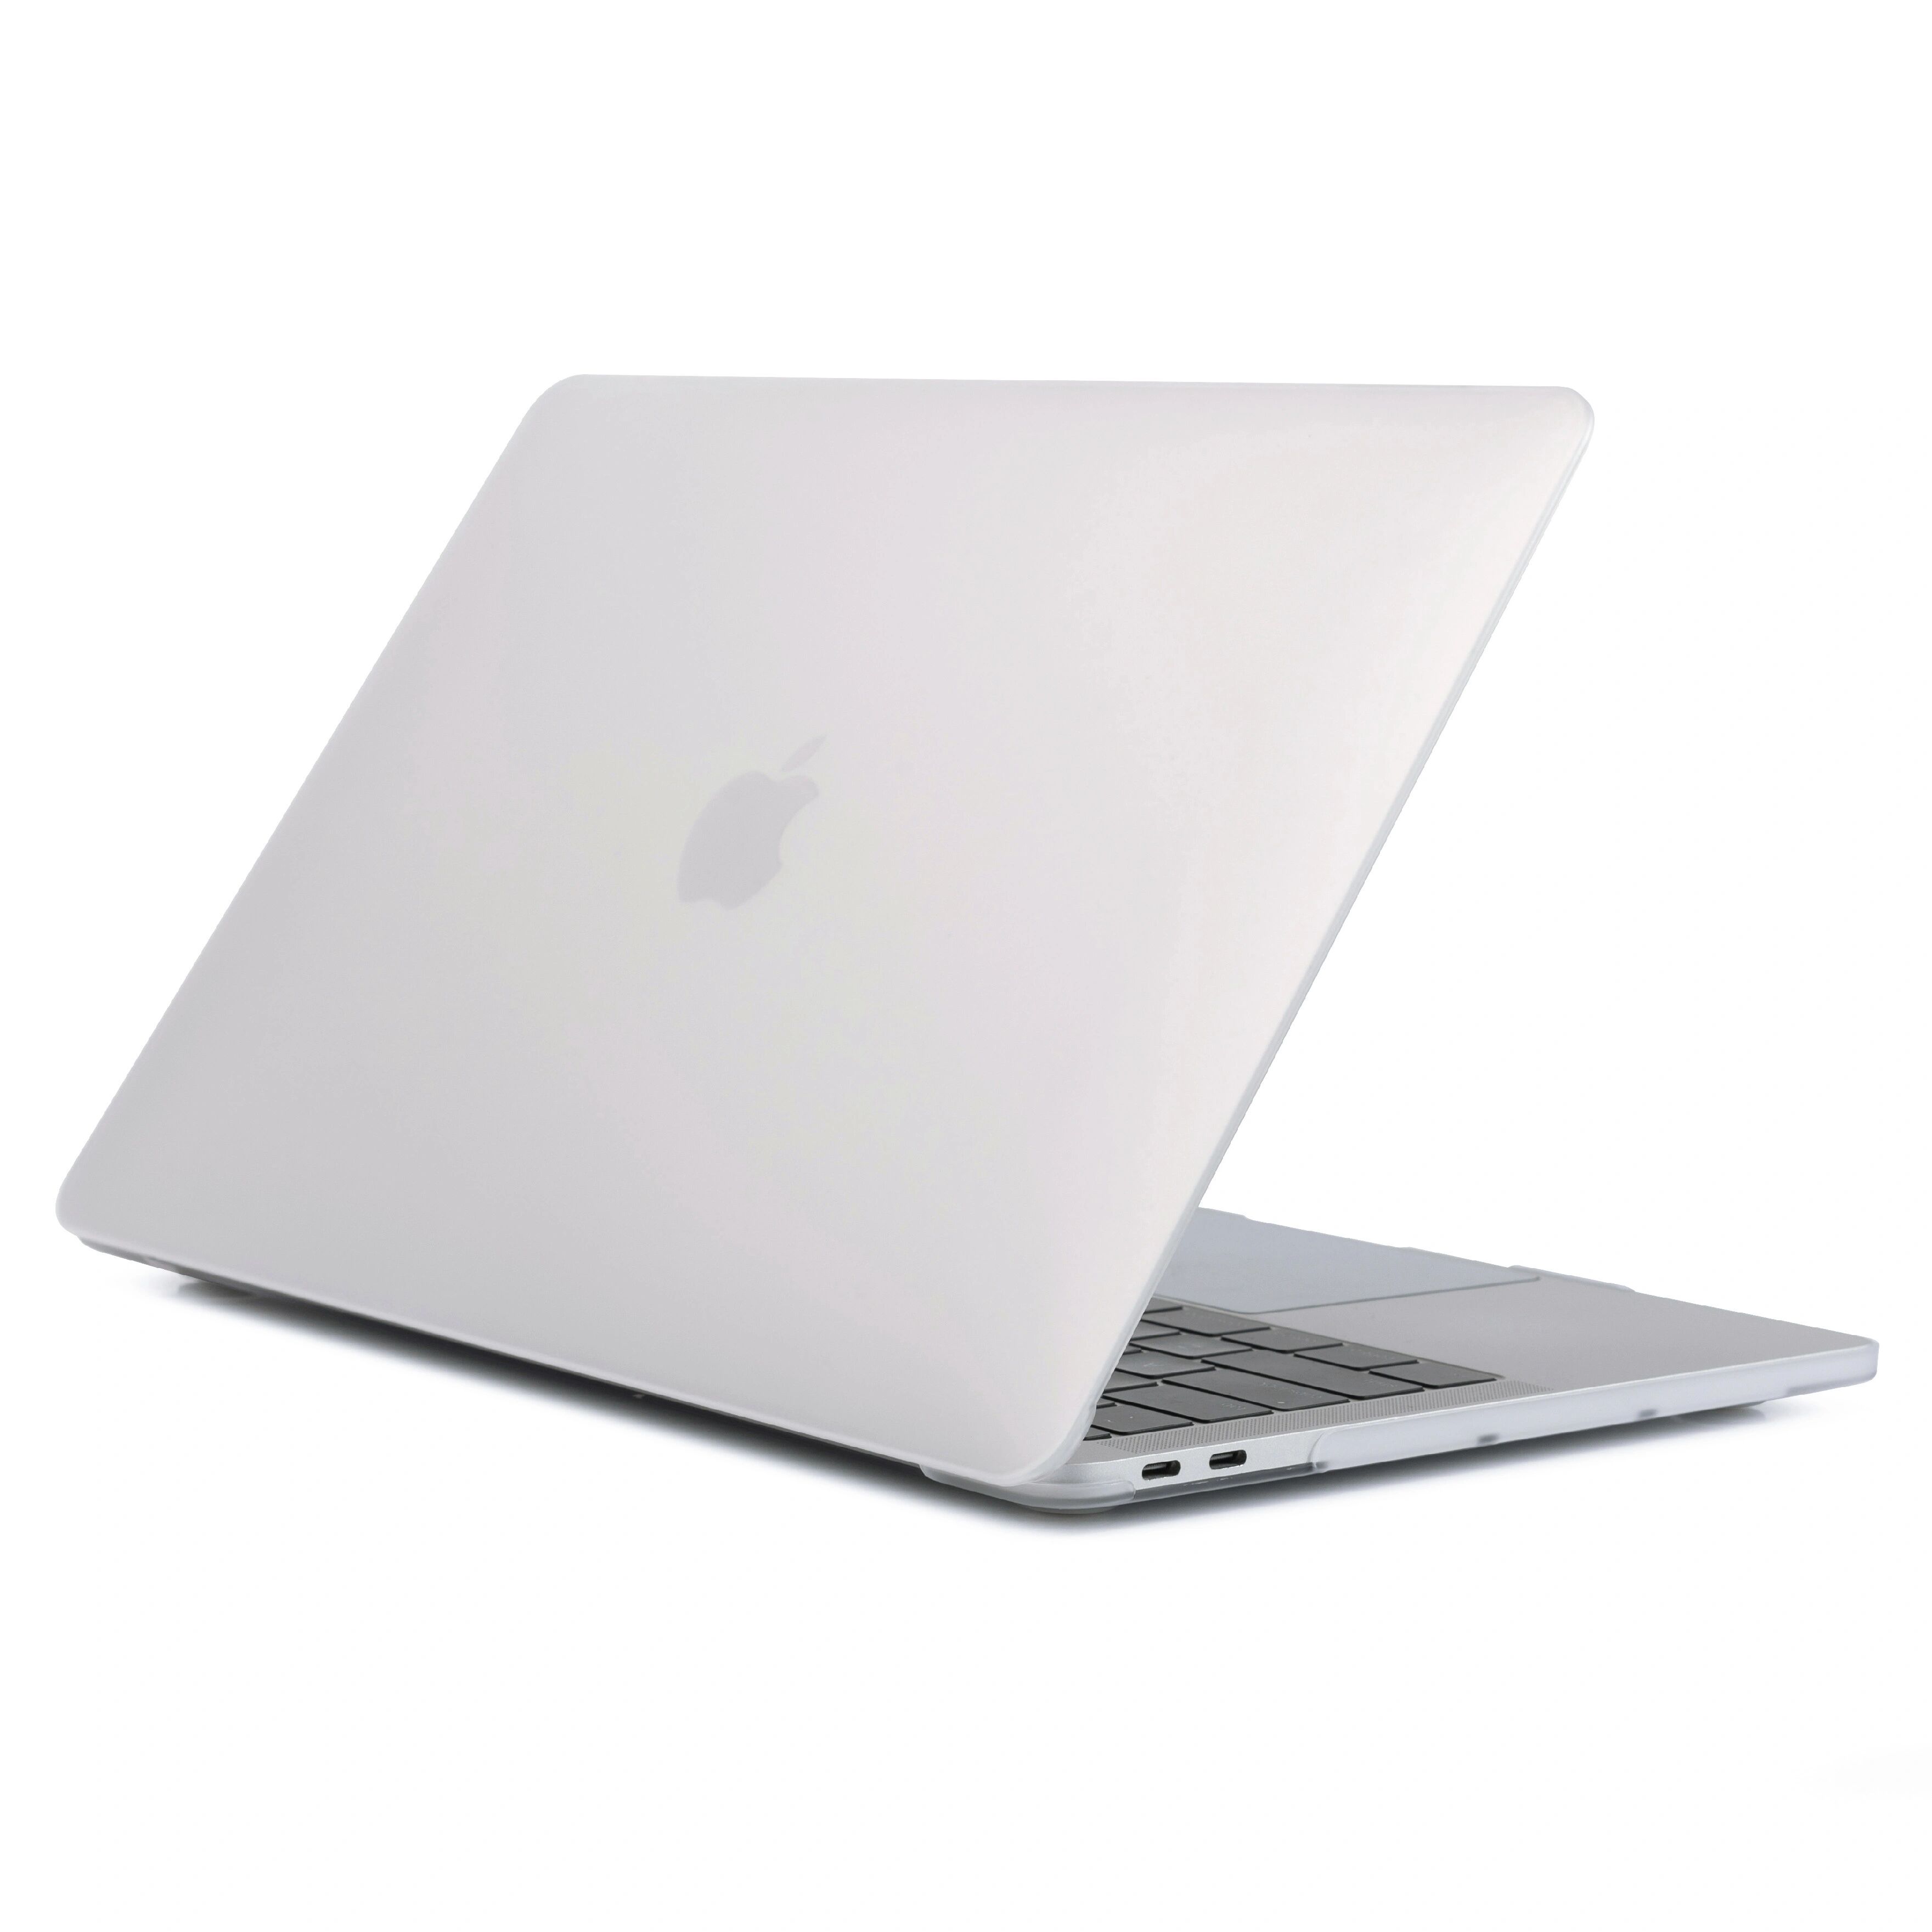 iPouzdro.cz Ochranný kryt na MacBook Pro 15 (2012-2015) - Matte Transparent